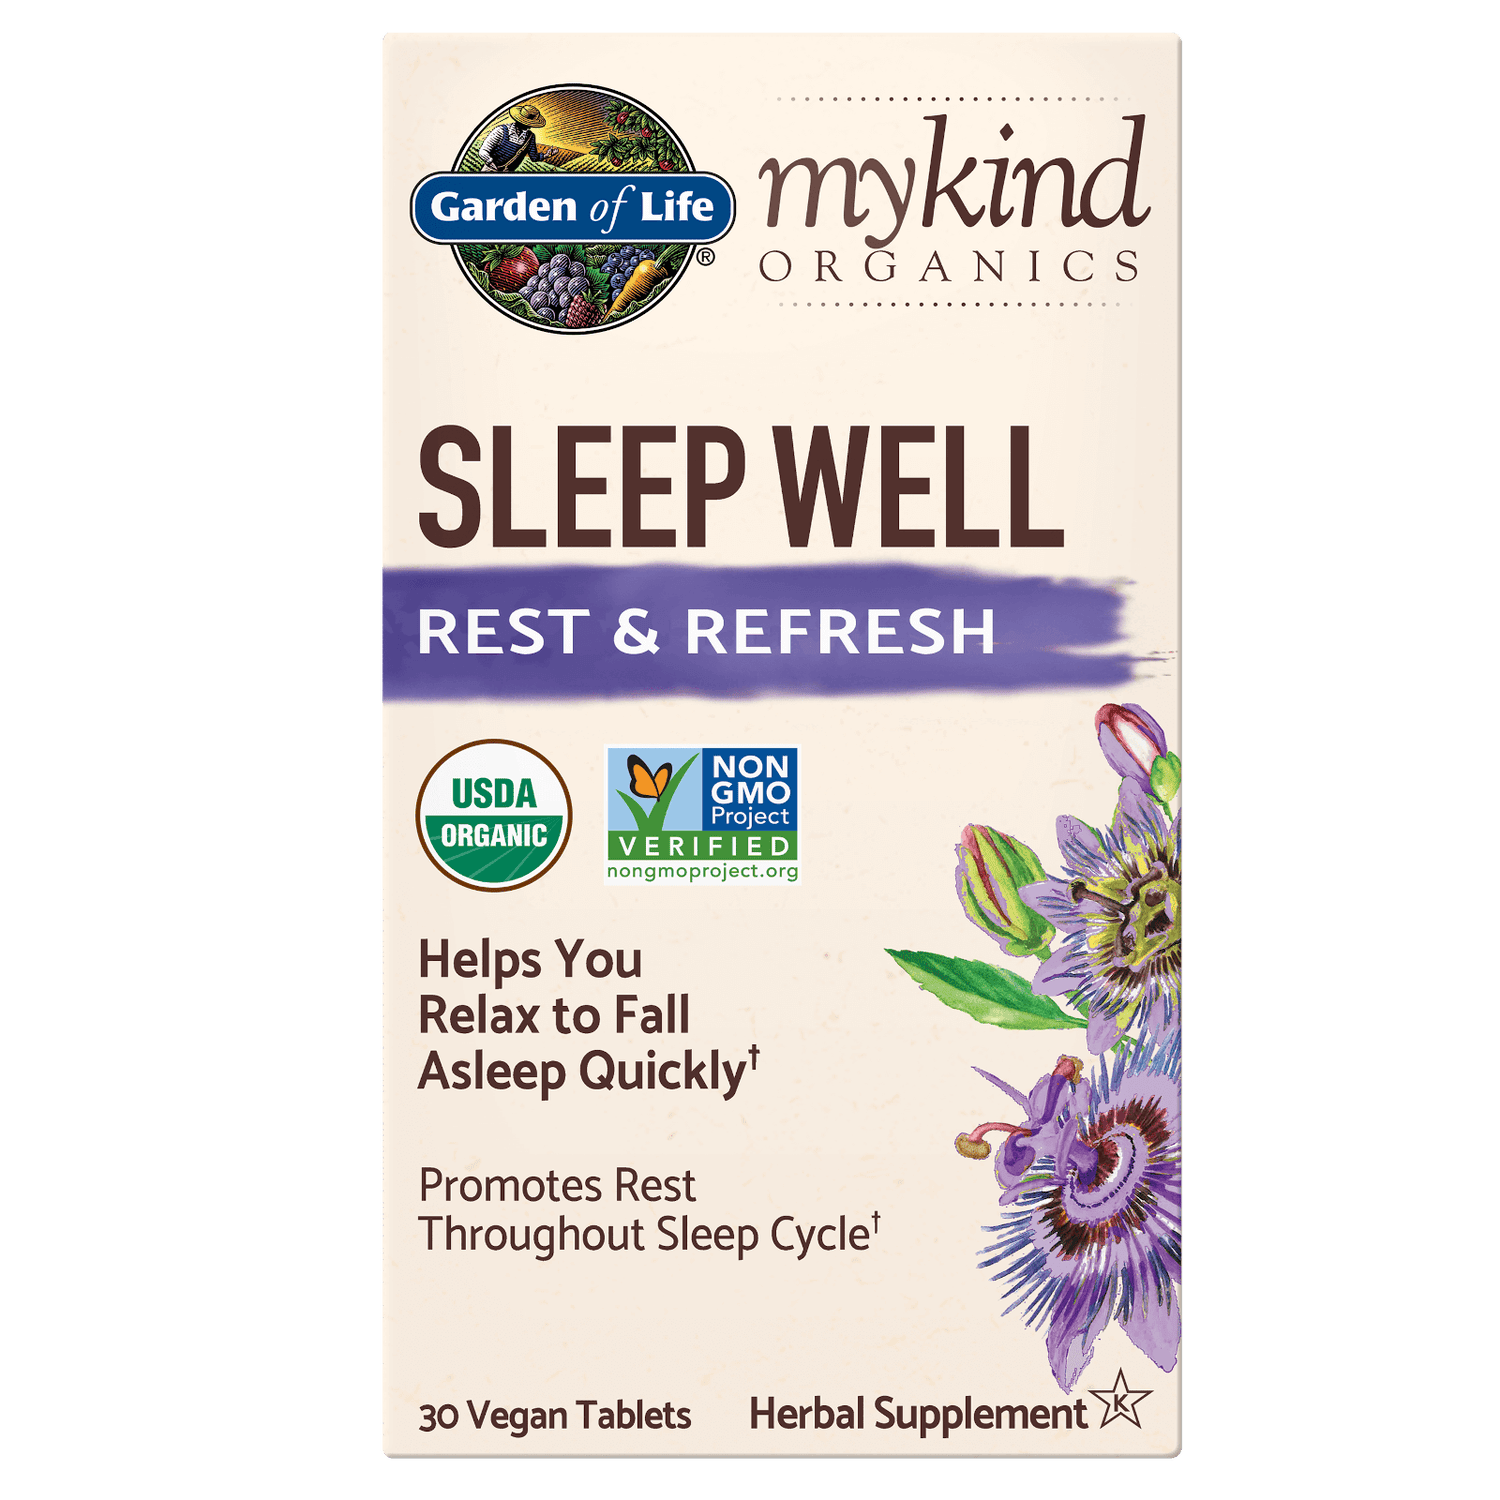 Comprimidos de noche mykind Organics Herbal - 30 comprimidos